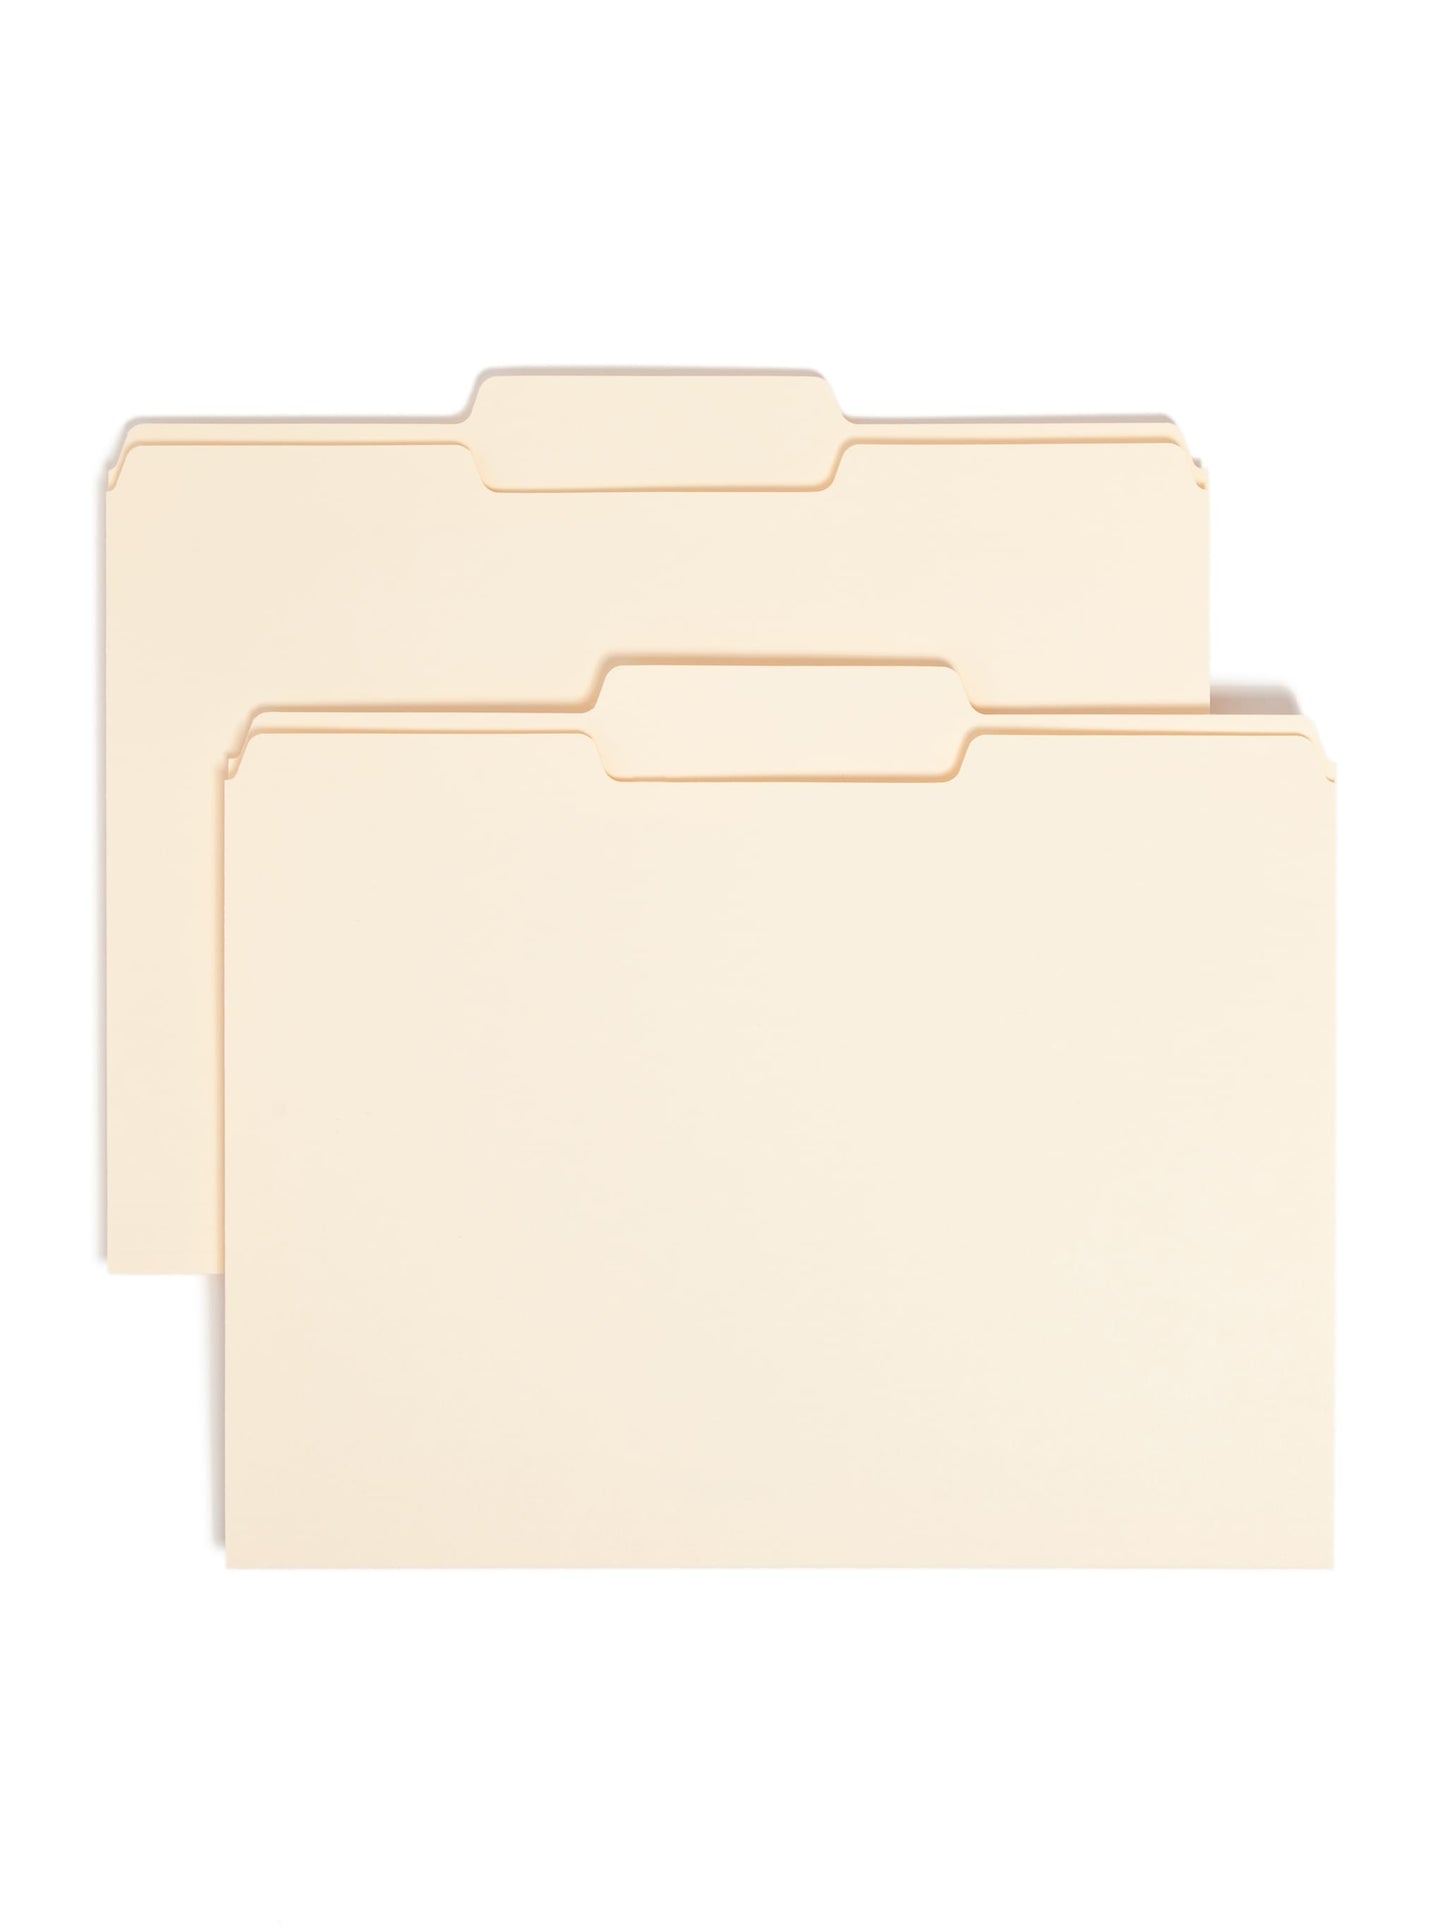 Standard File Folders, 1/3-Cut Center Tab, Manila Color, Letter Size, Set of 100, 086486103329